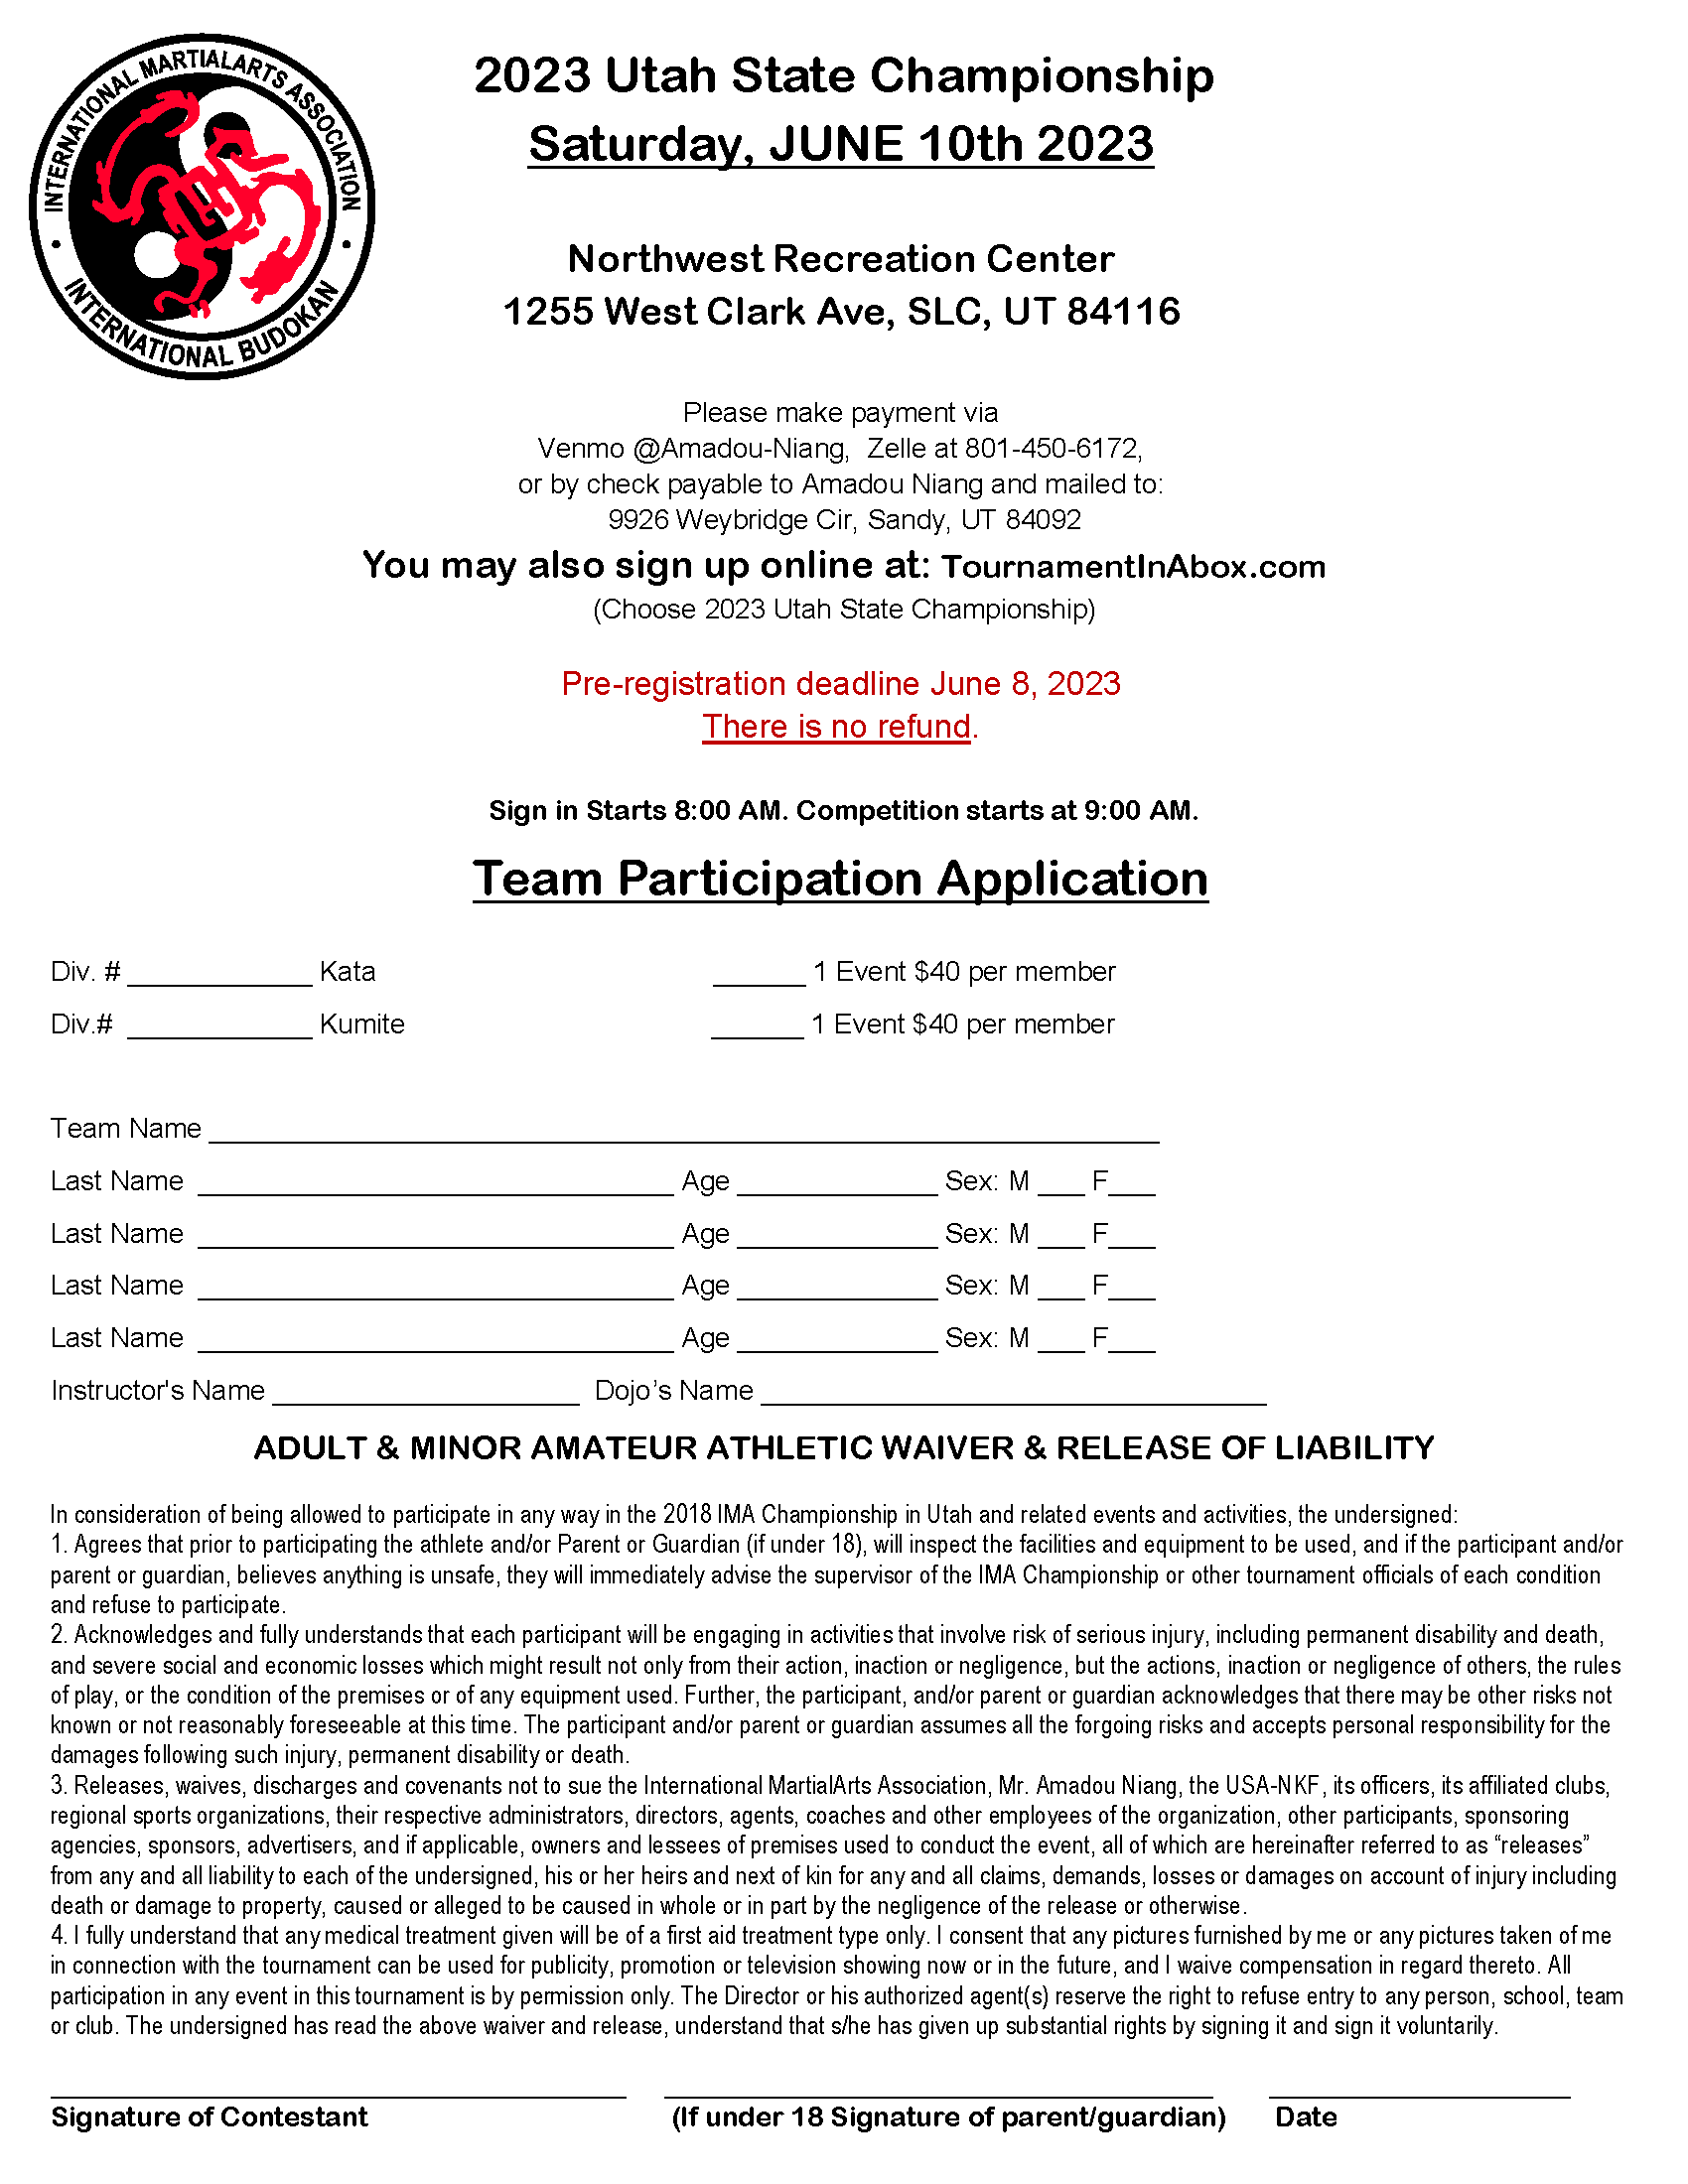 2023 Utah State Championship Invitation LetterFlyer Page 1